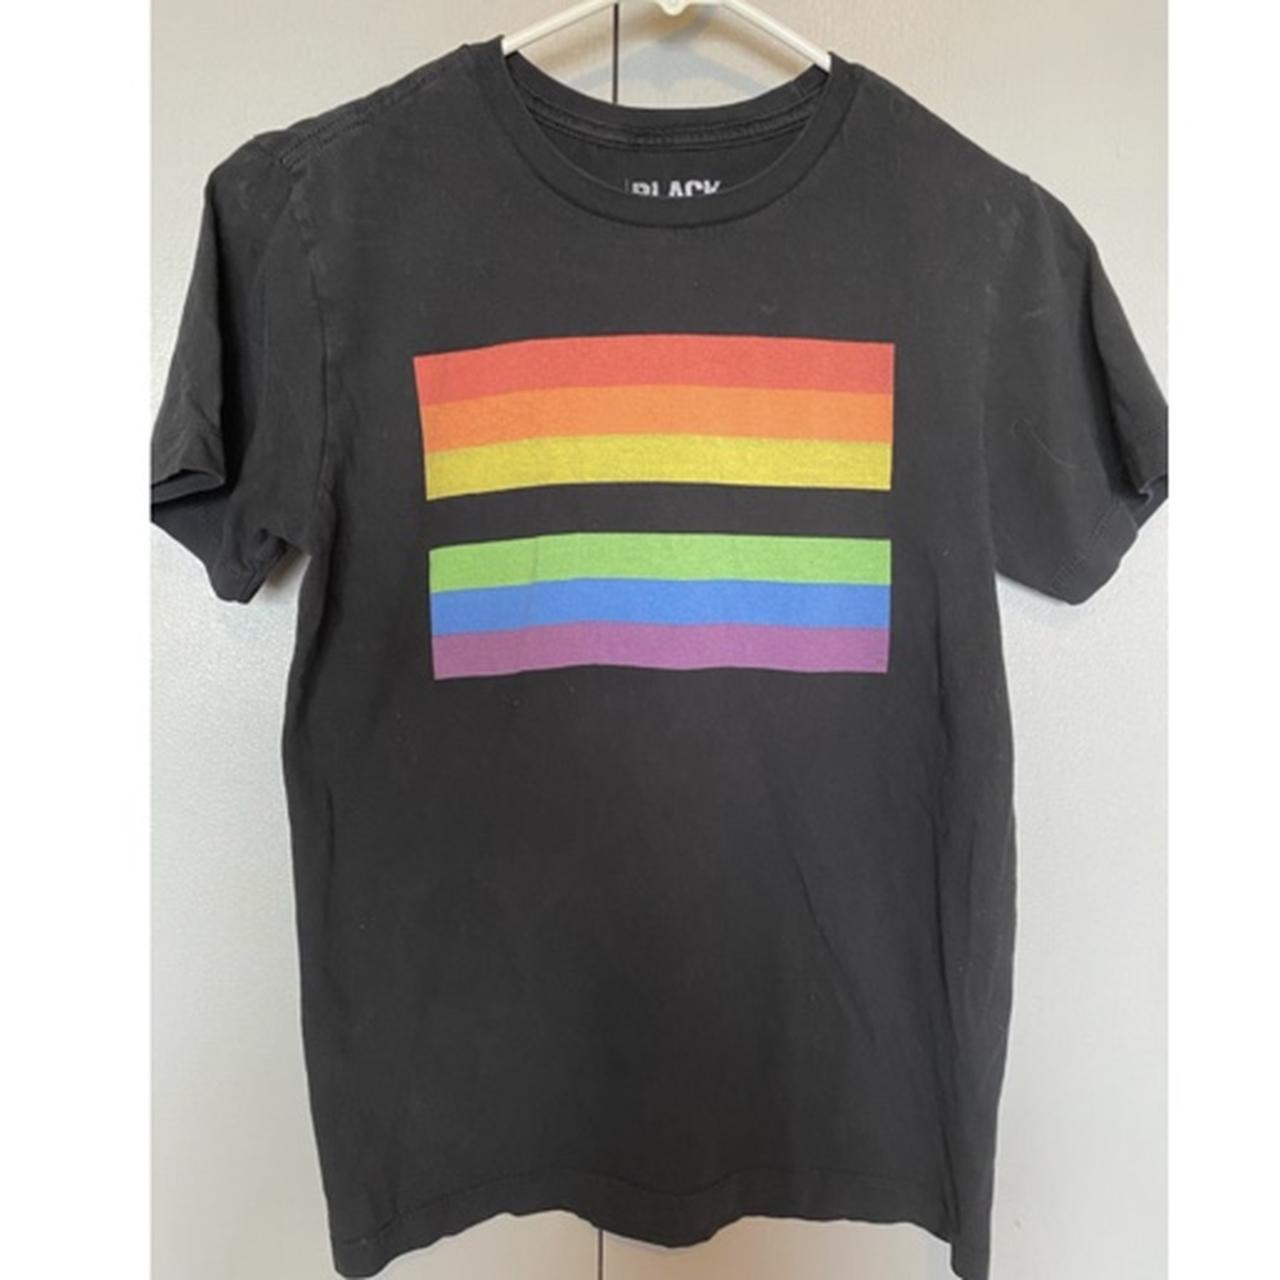 hot topic gay pride shirt